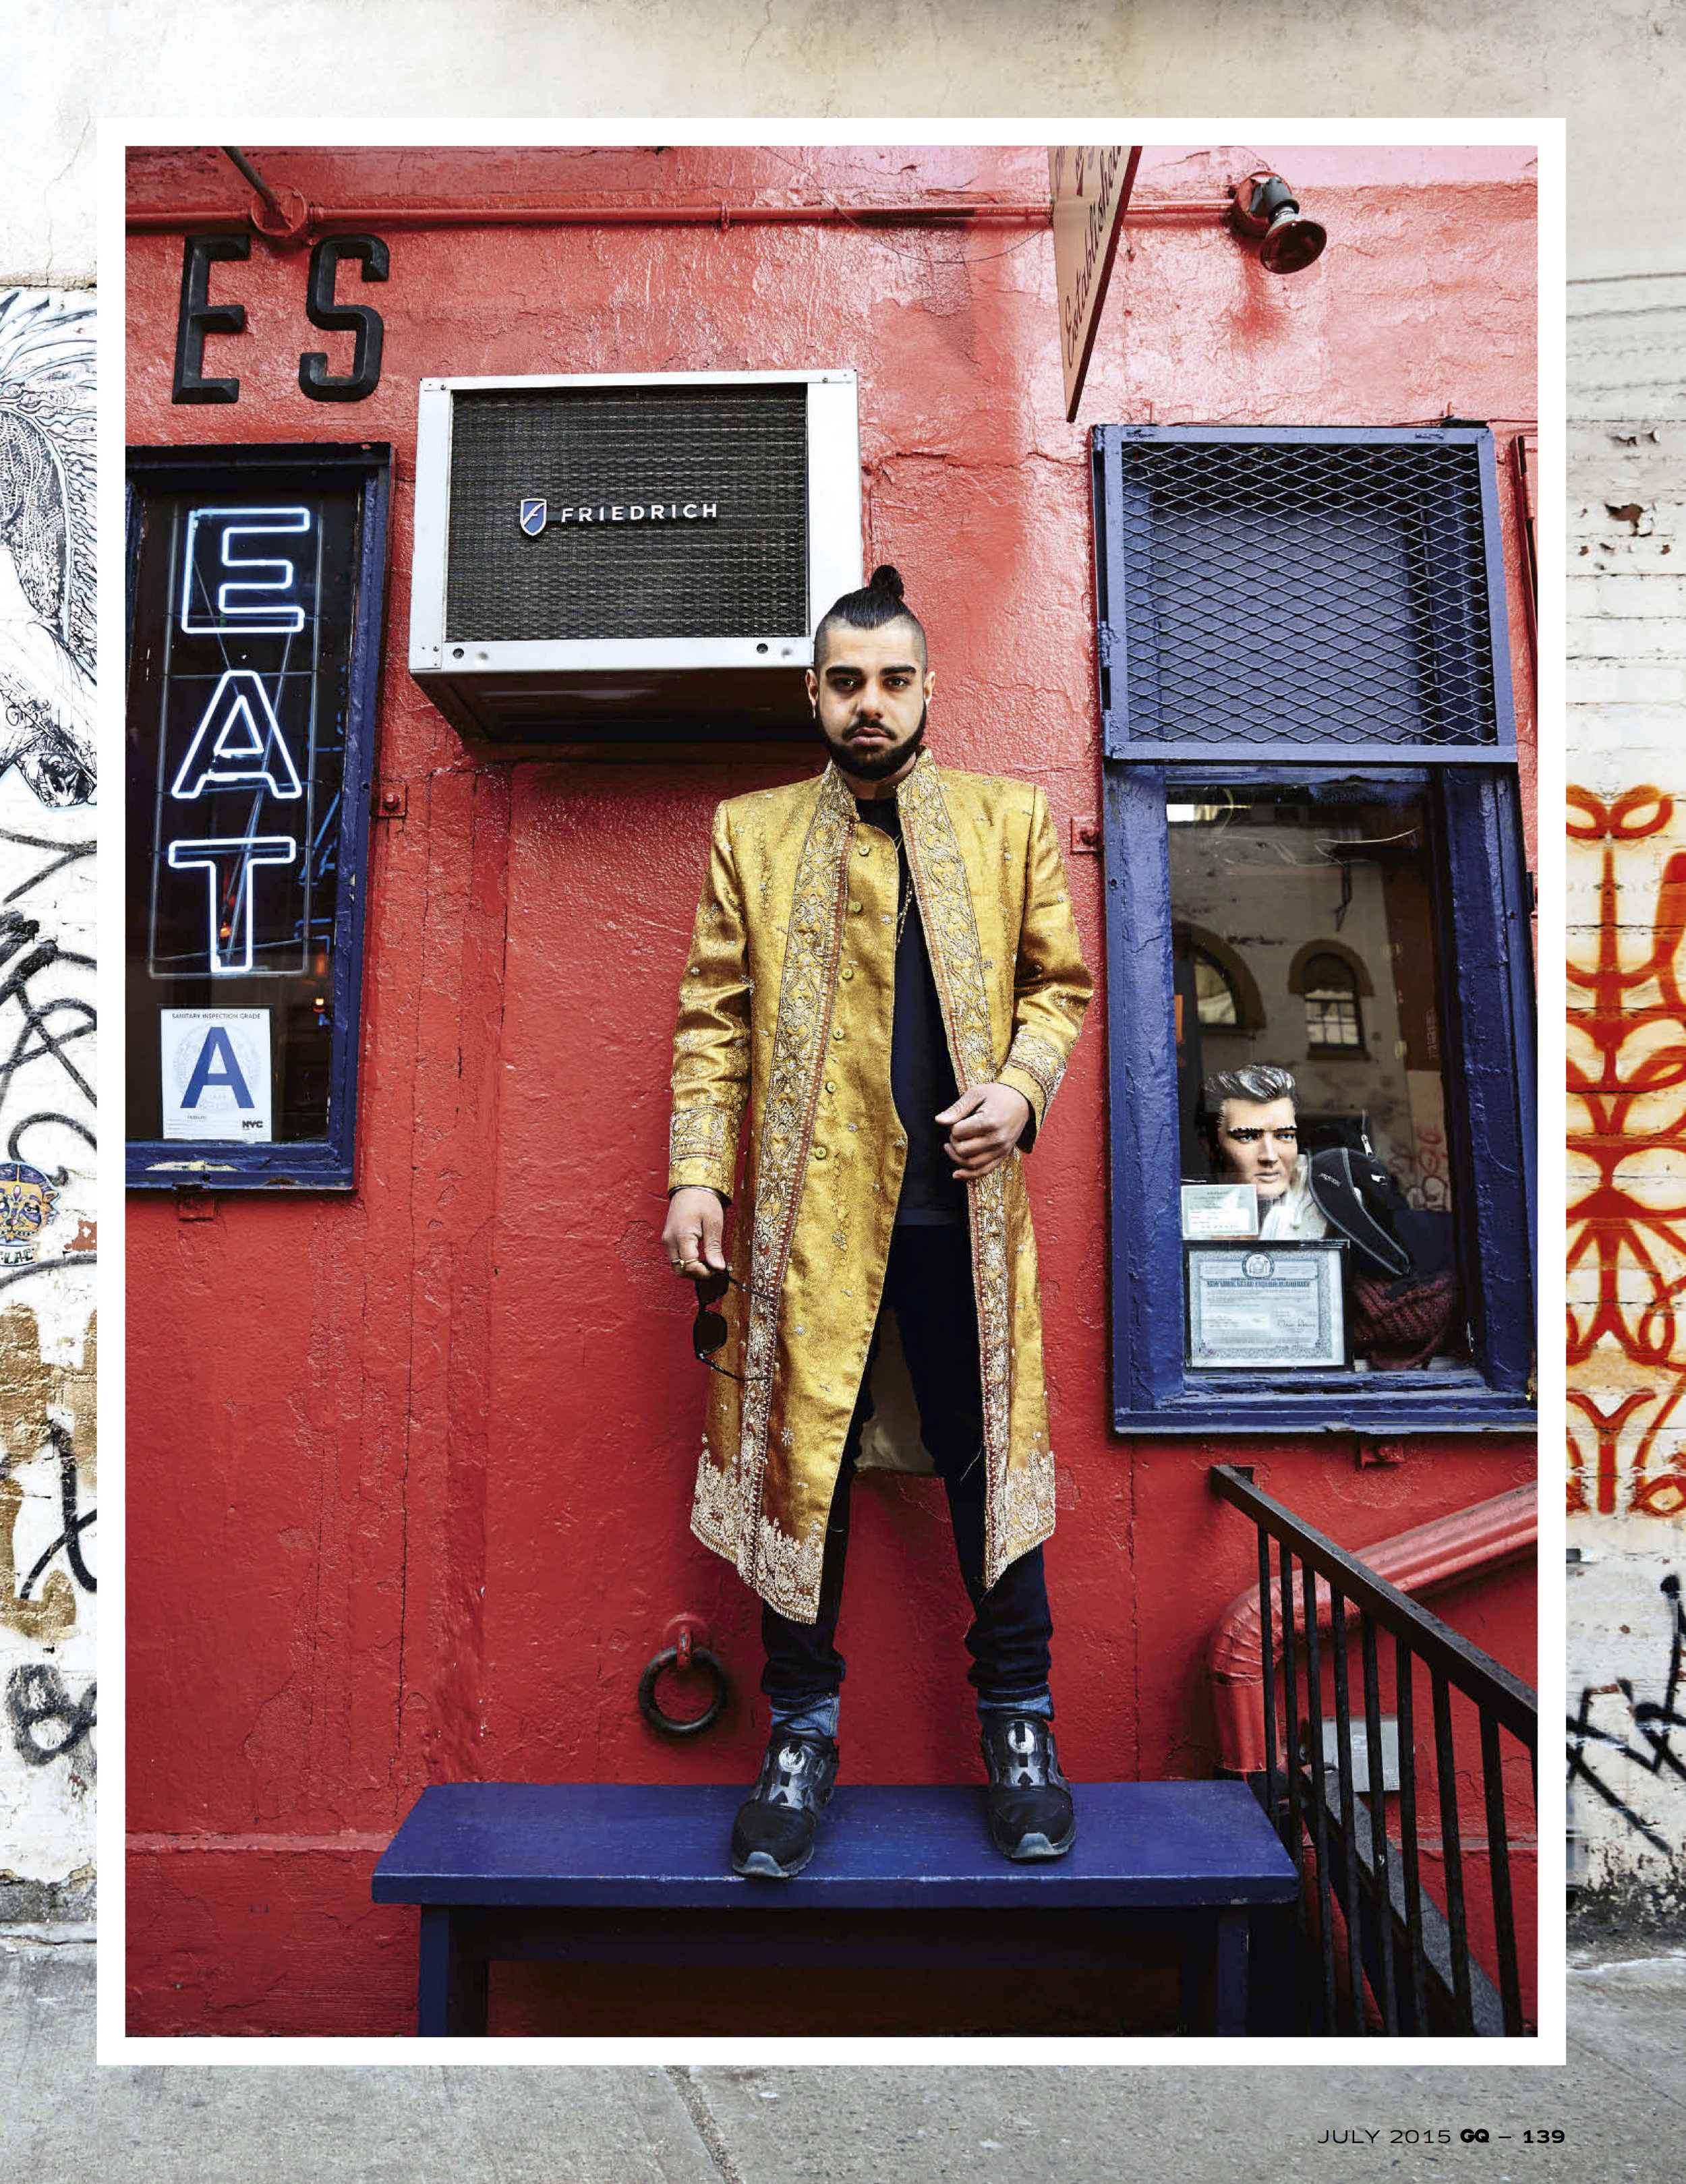  Himanshu Suri, musician - Swet Shop Boys, Das Racist   GQ India  